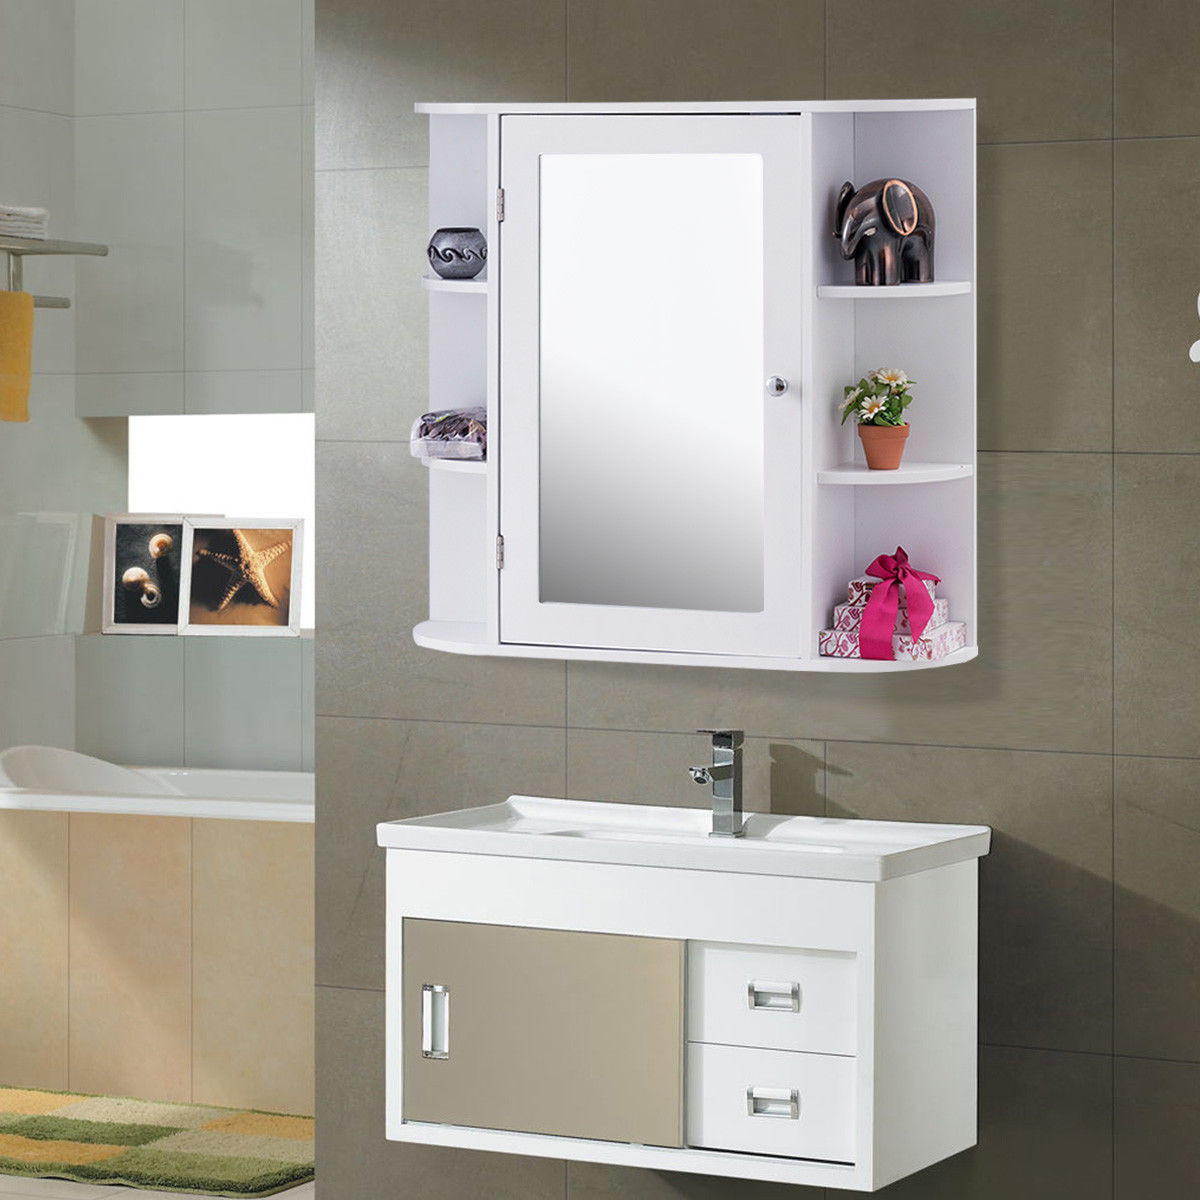 Modern Bathroom Storage Cabinet
 Giantex Multipurpose Mount Wall Surface Bathroom Storage